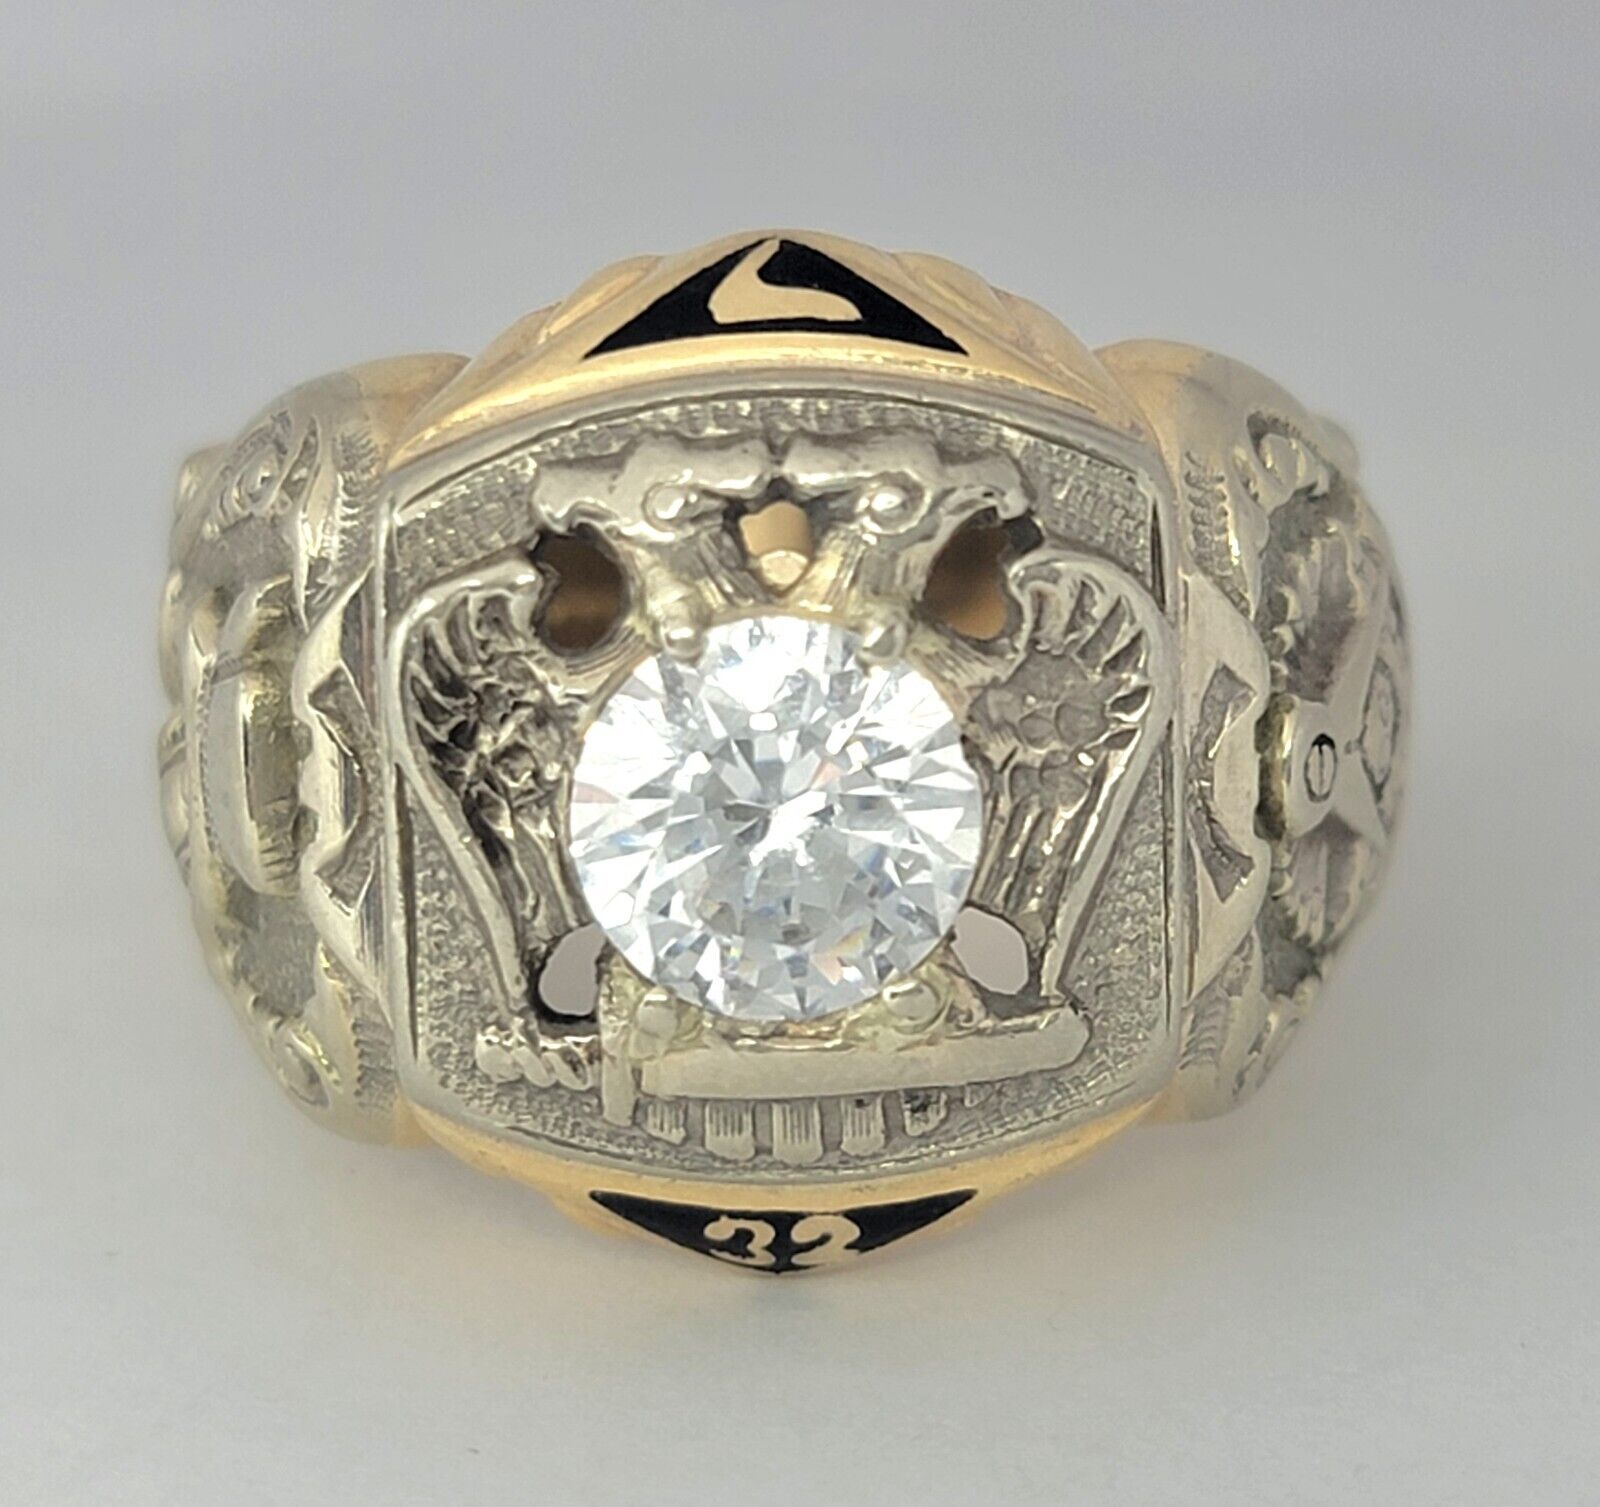 Vintage 14k Gold 32nd degree Masonic Master Symbols Ring Size 11 - 15.6gr